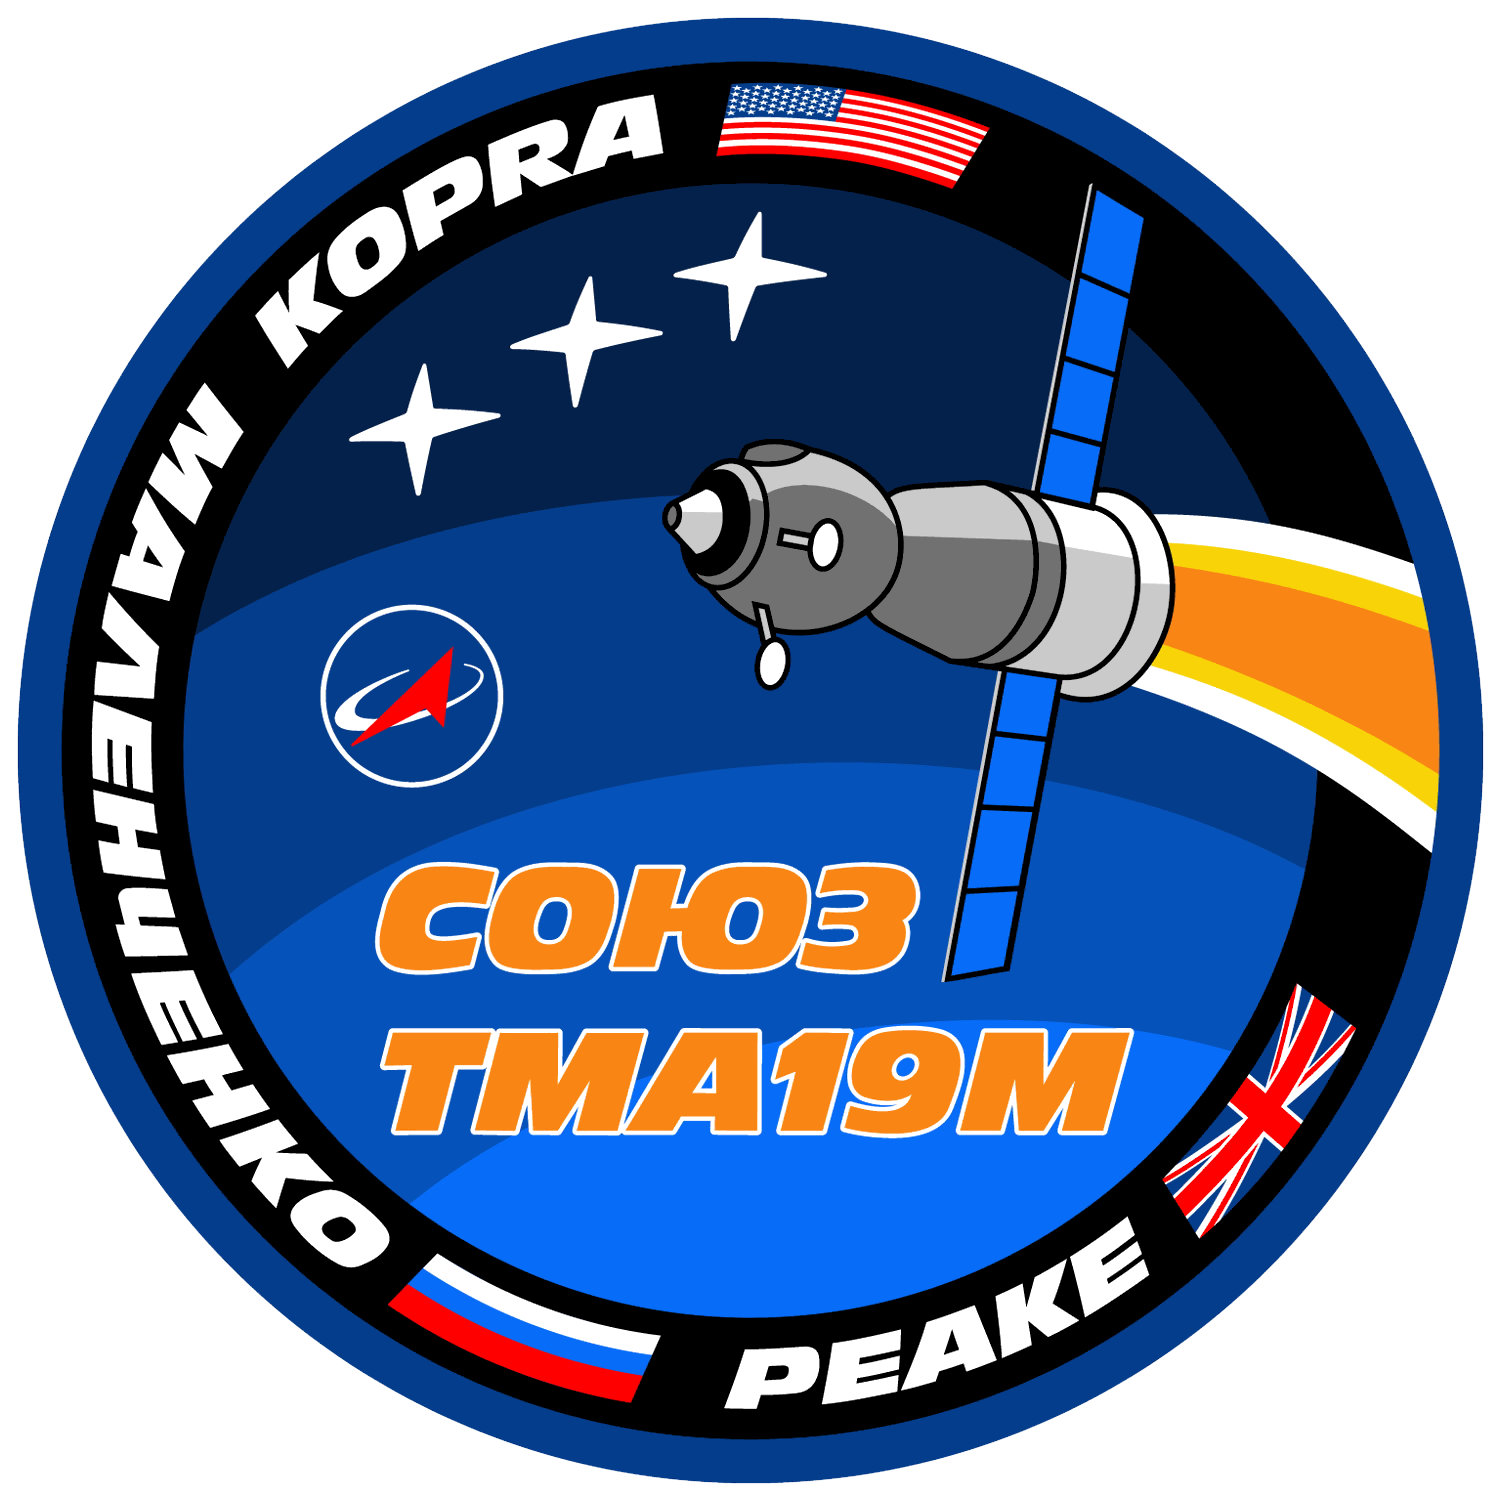 Mission patch for Soyuz TMA-19M